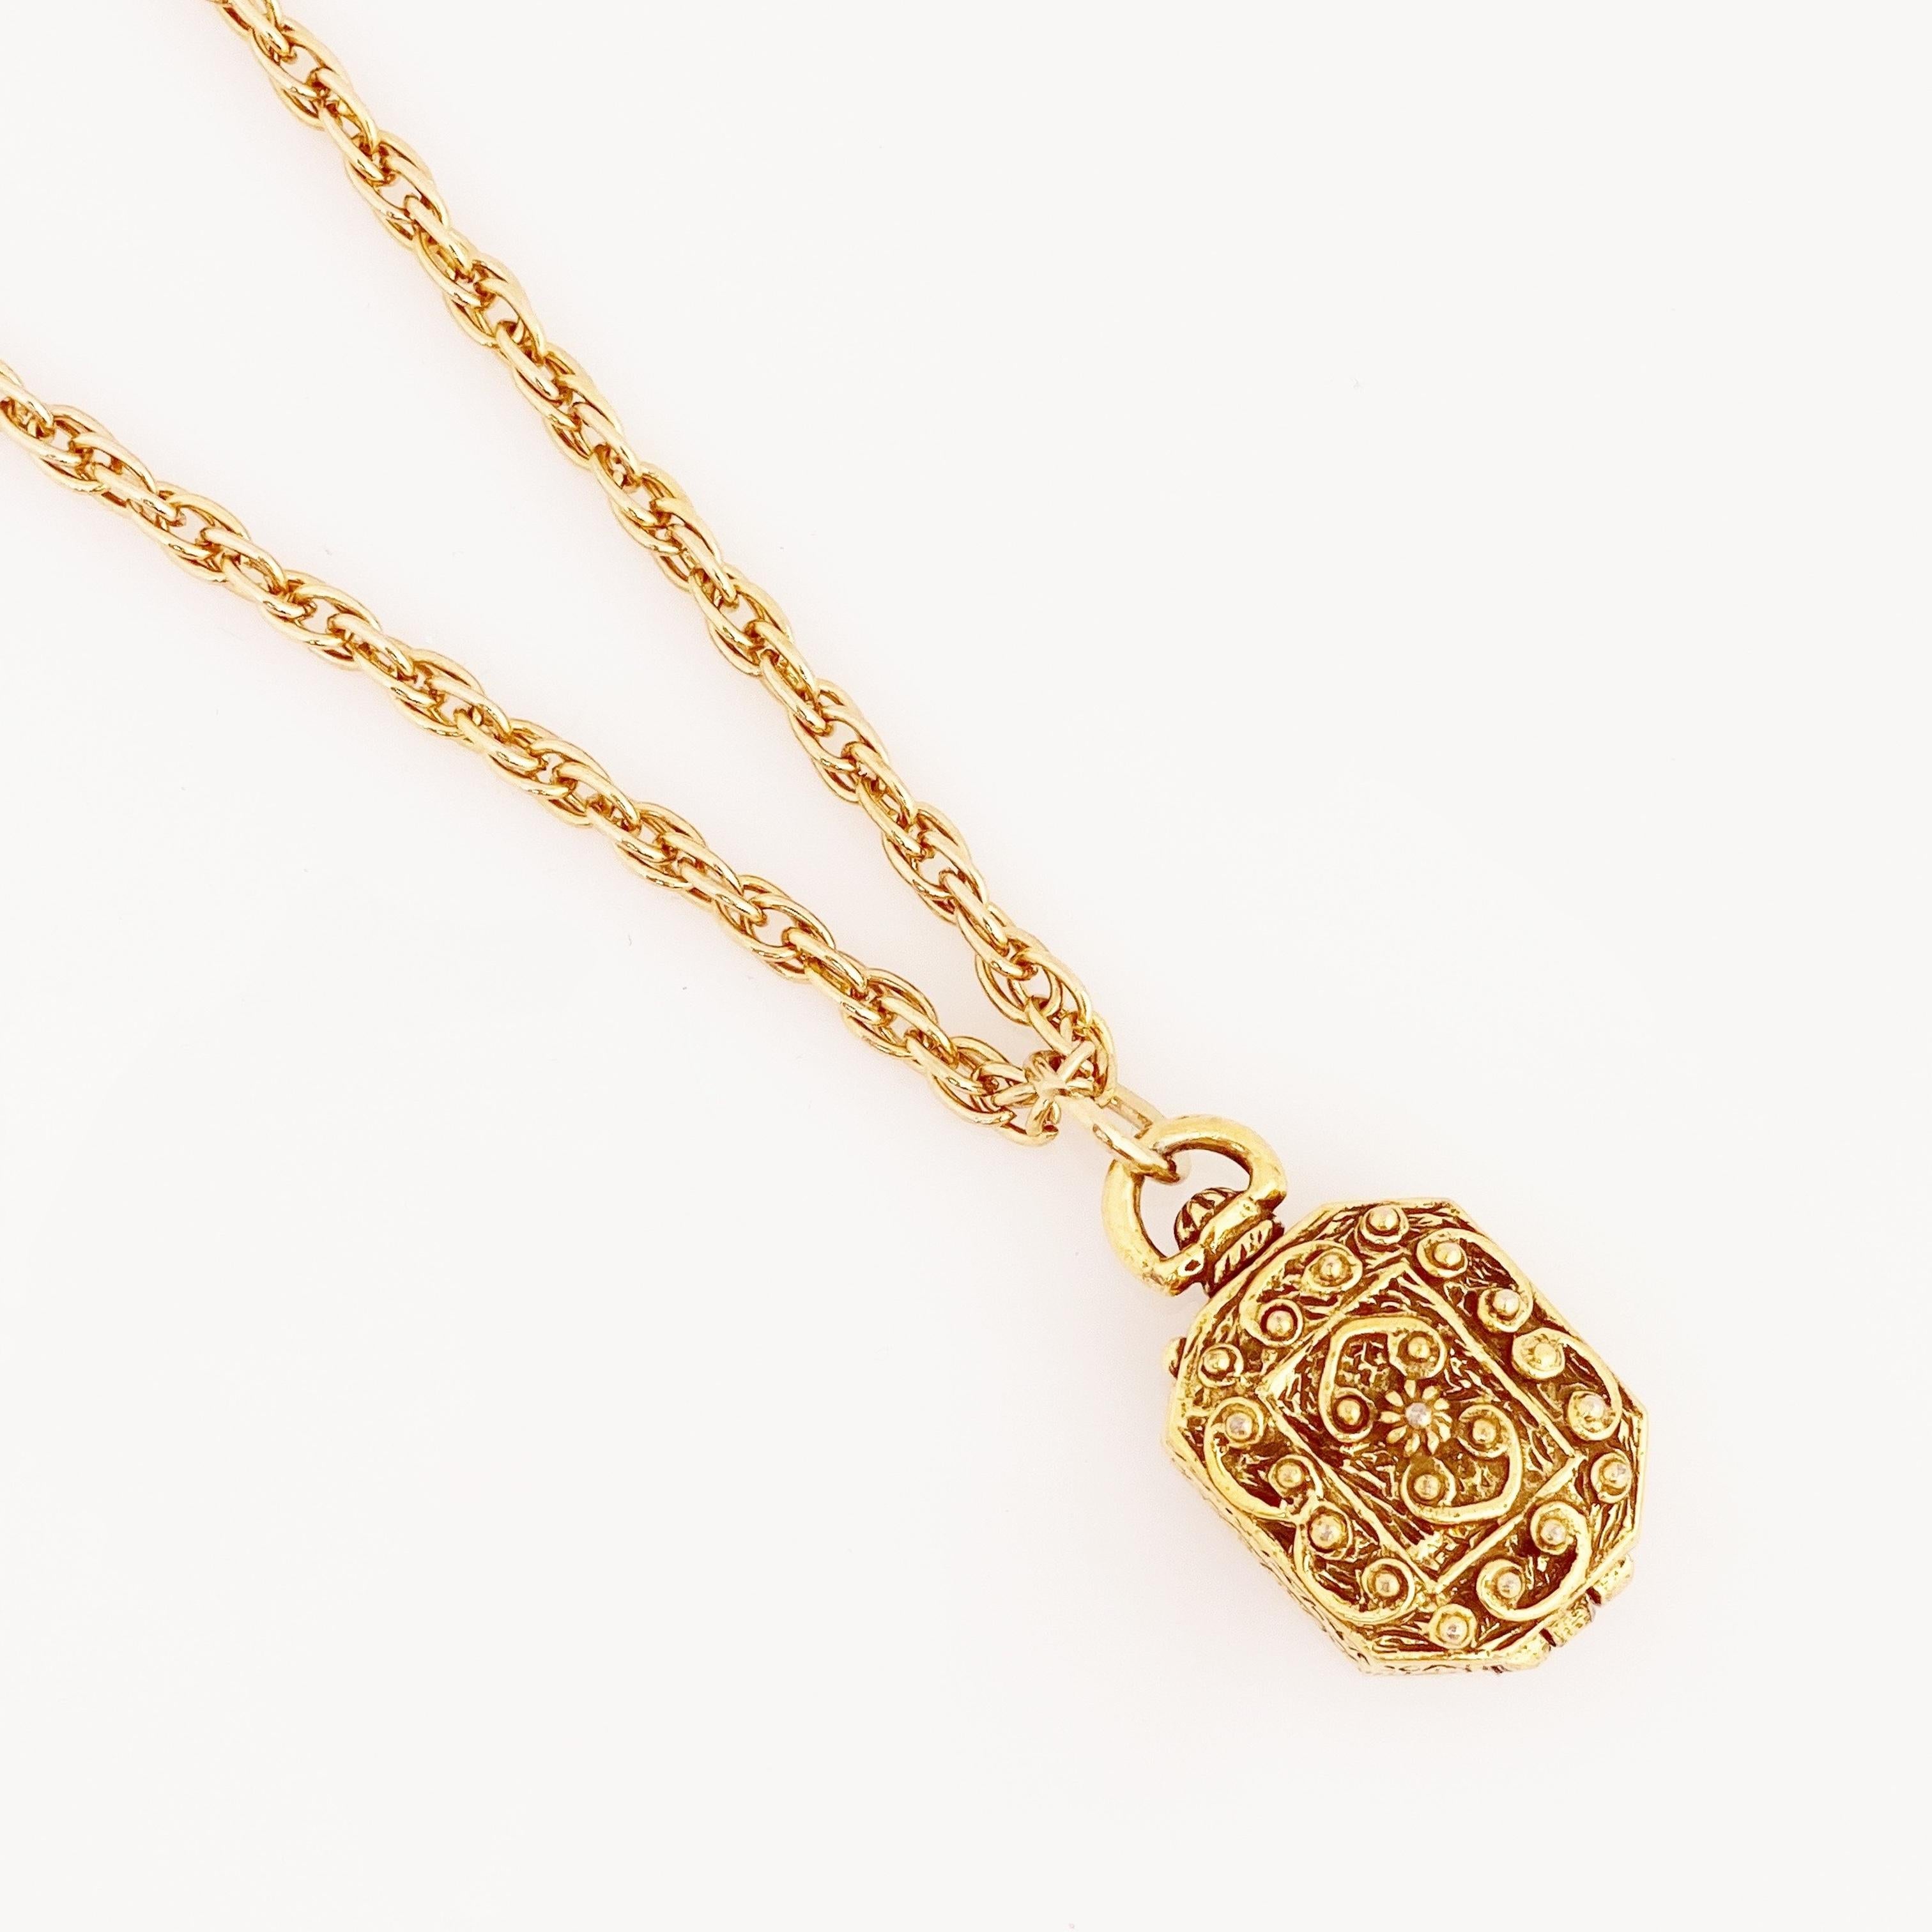 Women's Gold Victorian Revival Locket Necklace By Goldette, 1960s